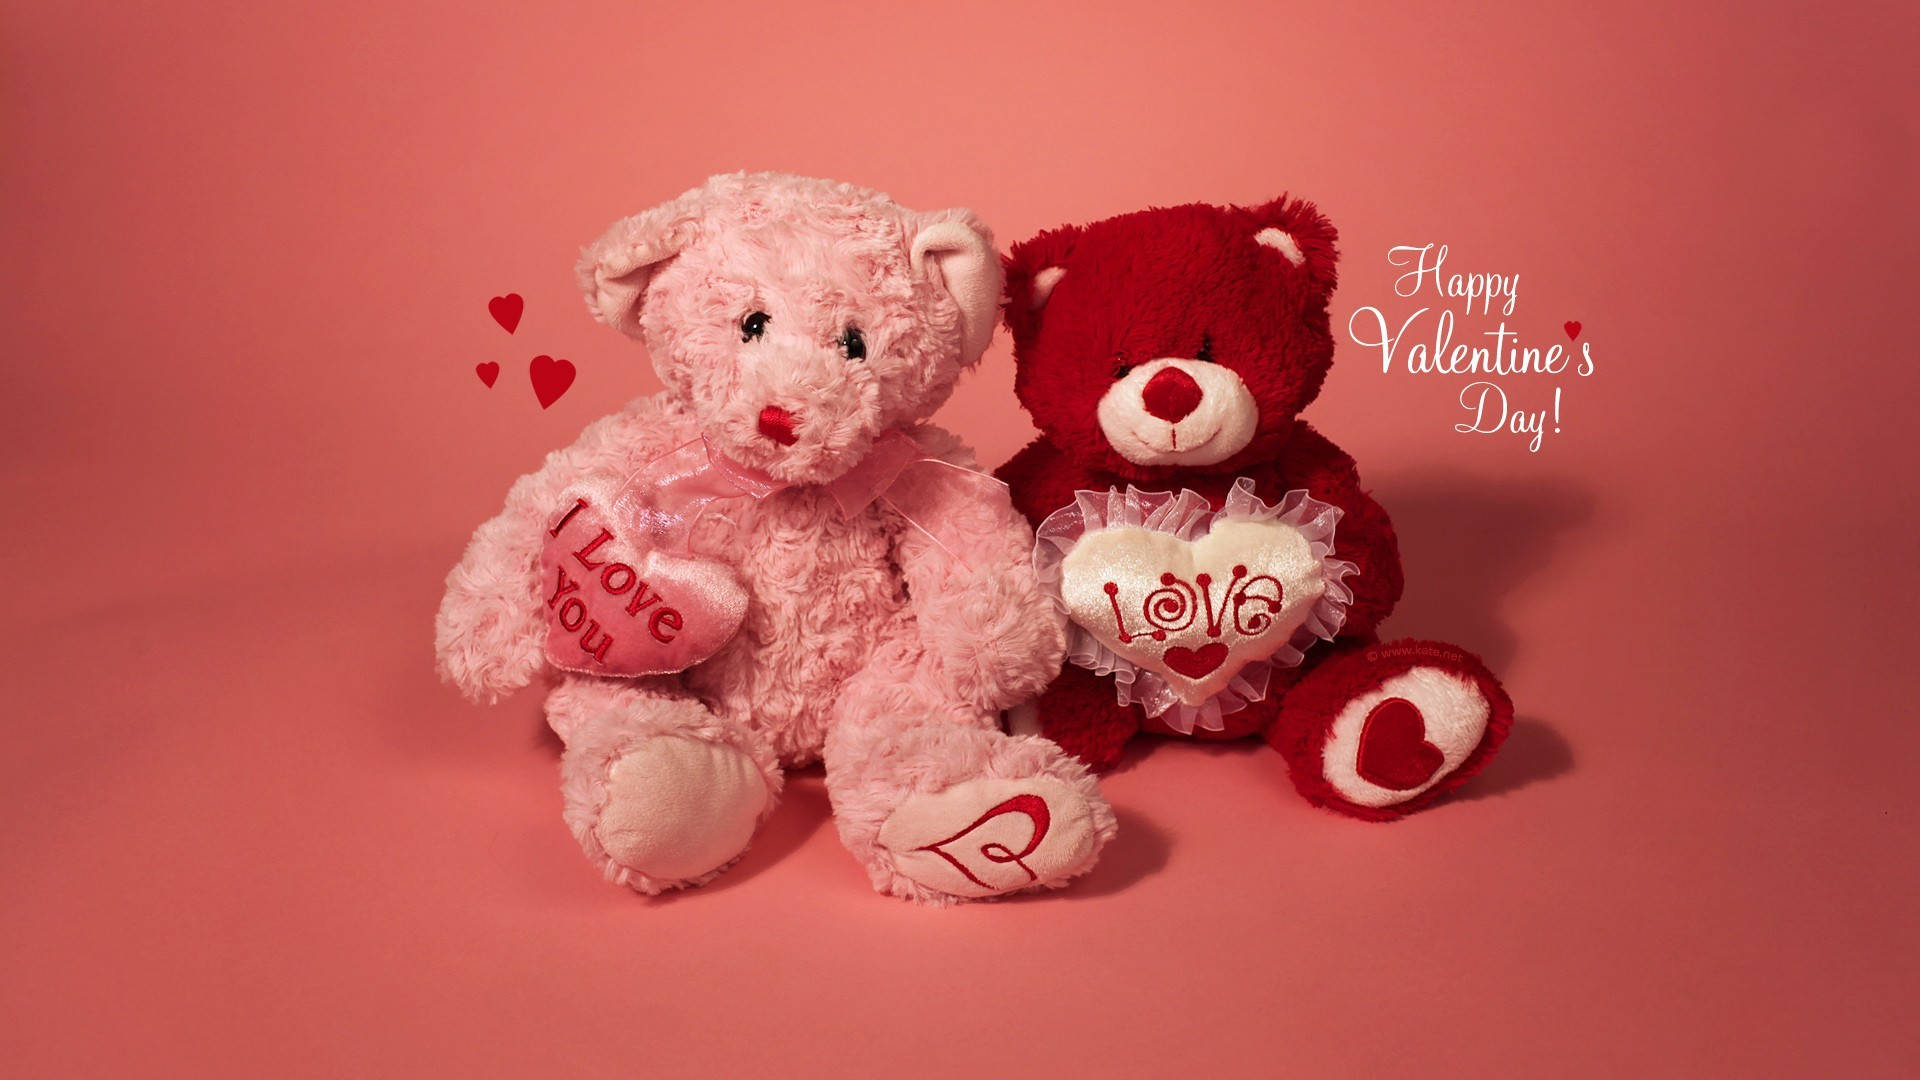 Happy Valentine’s Day Teddy Bears Background